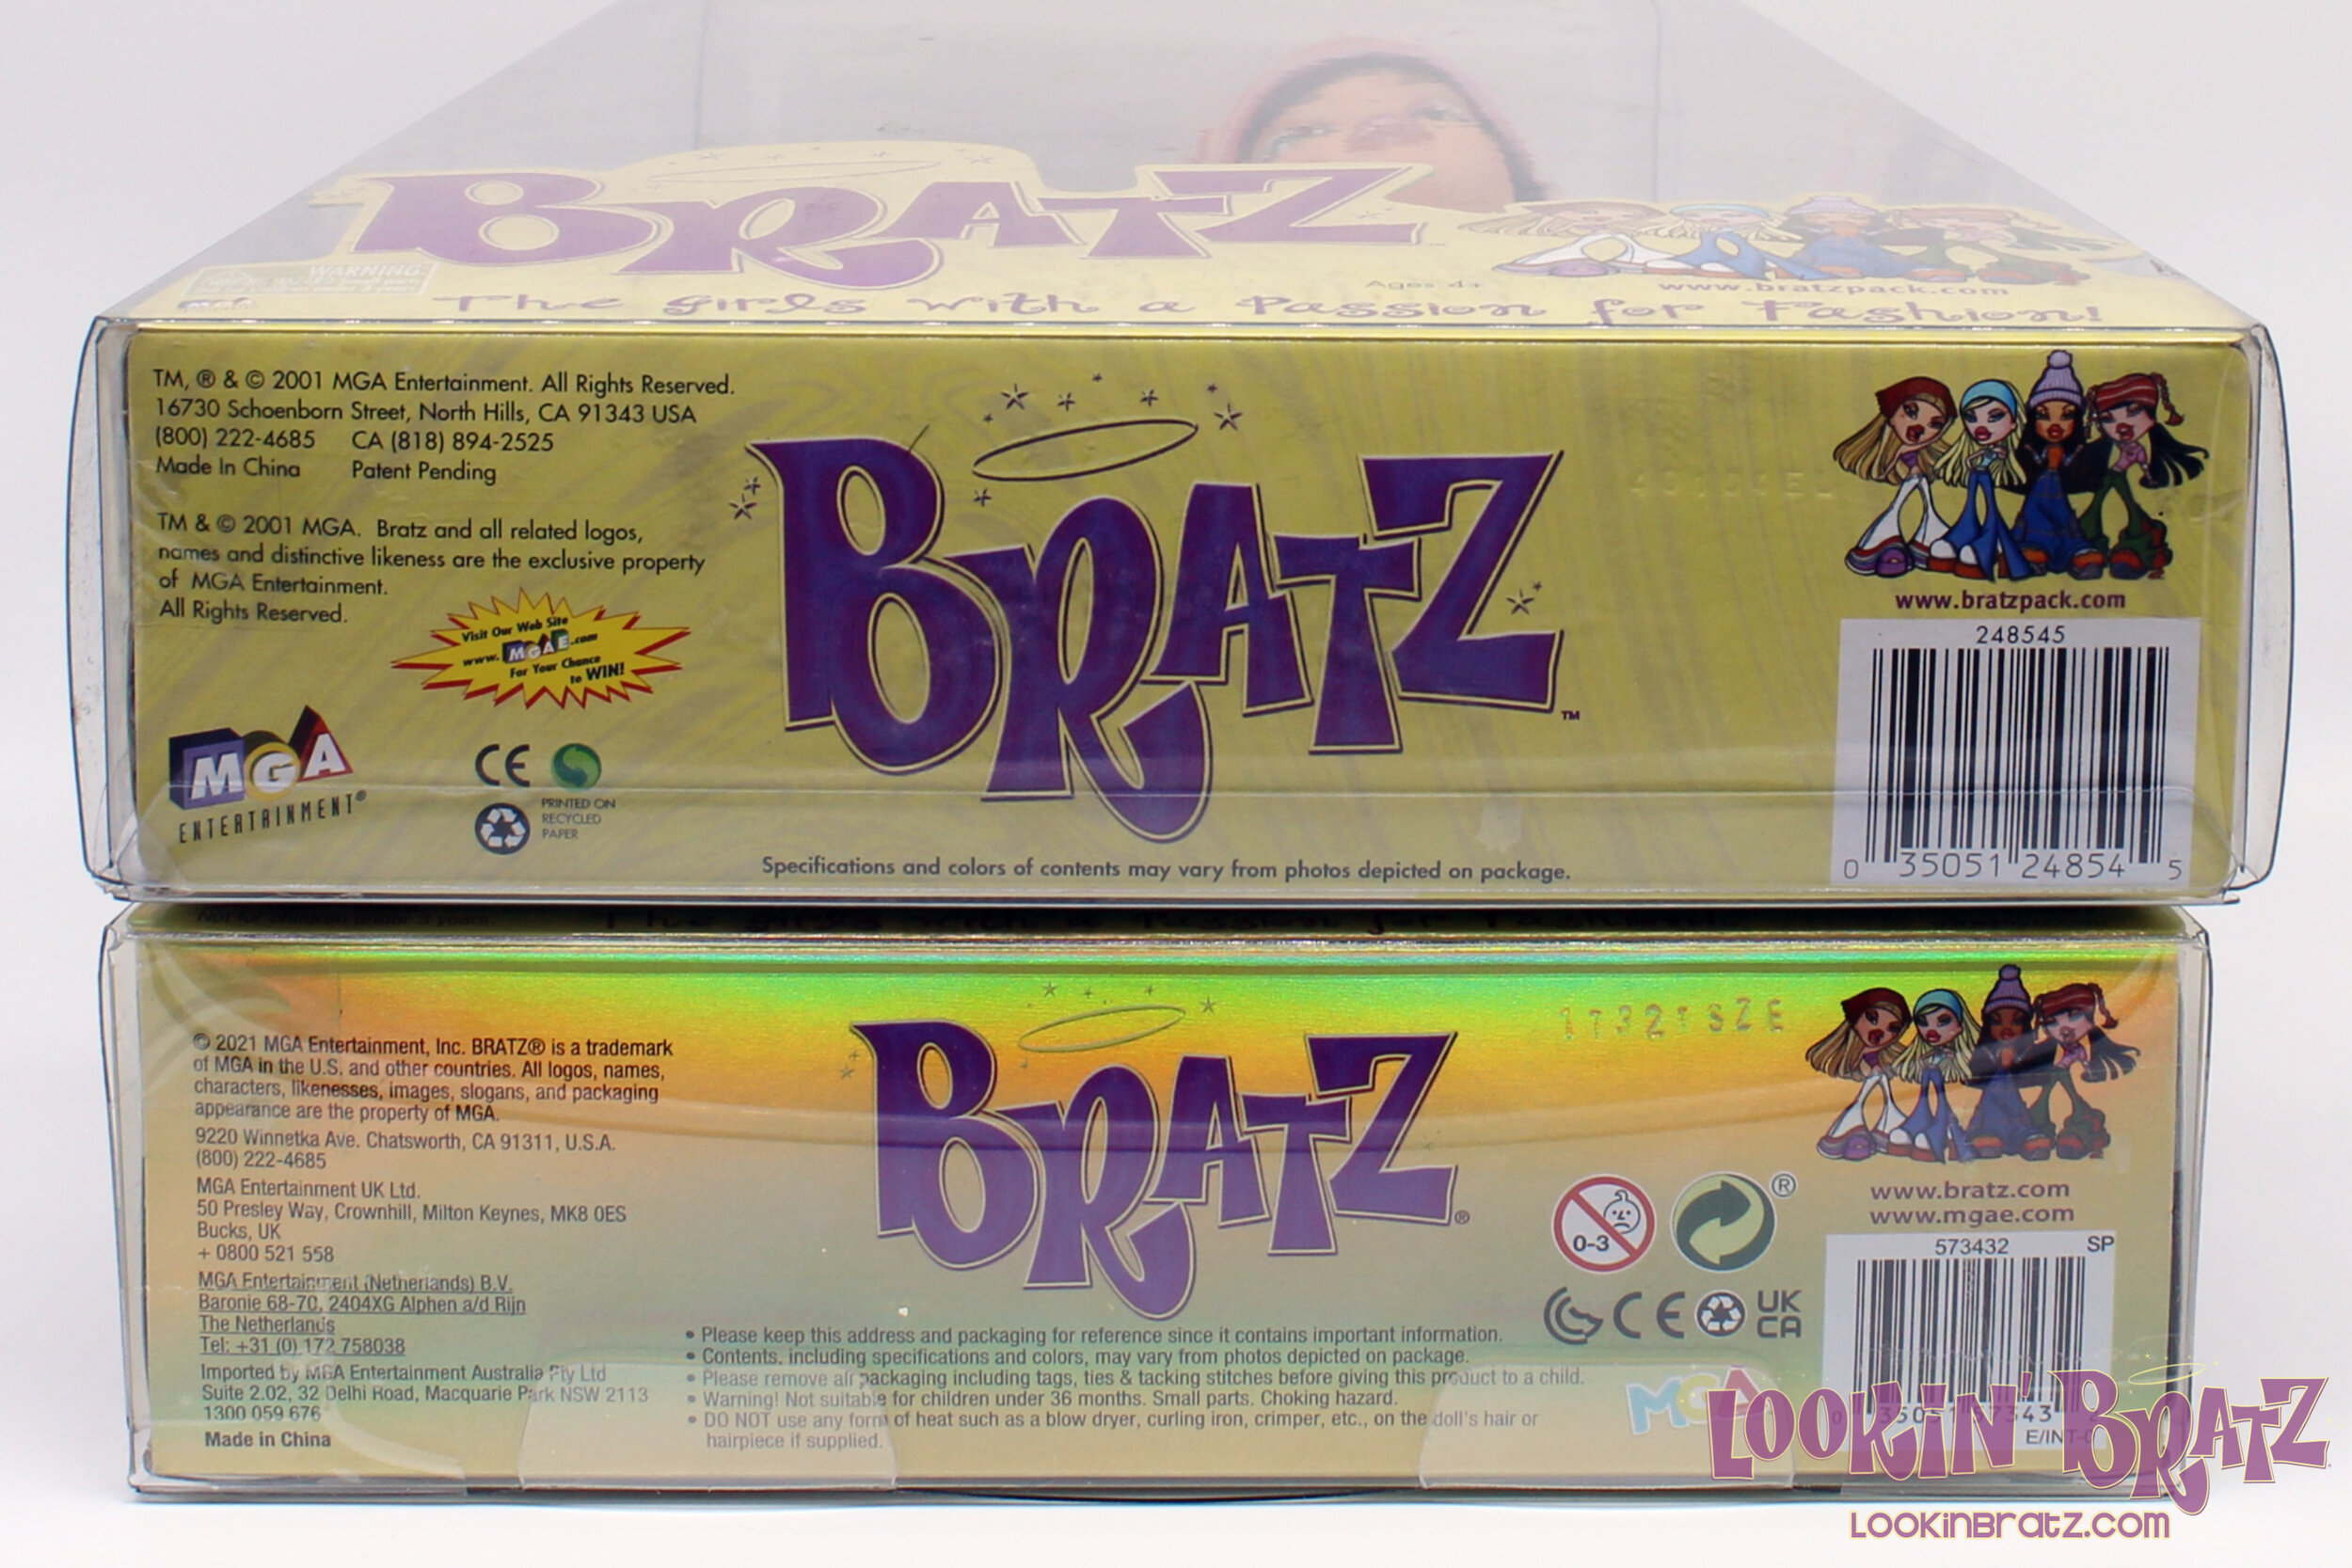 Bratz First Edition 2005 Re-Release vs. 2021 Re-Release Jade (Bottom)